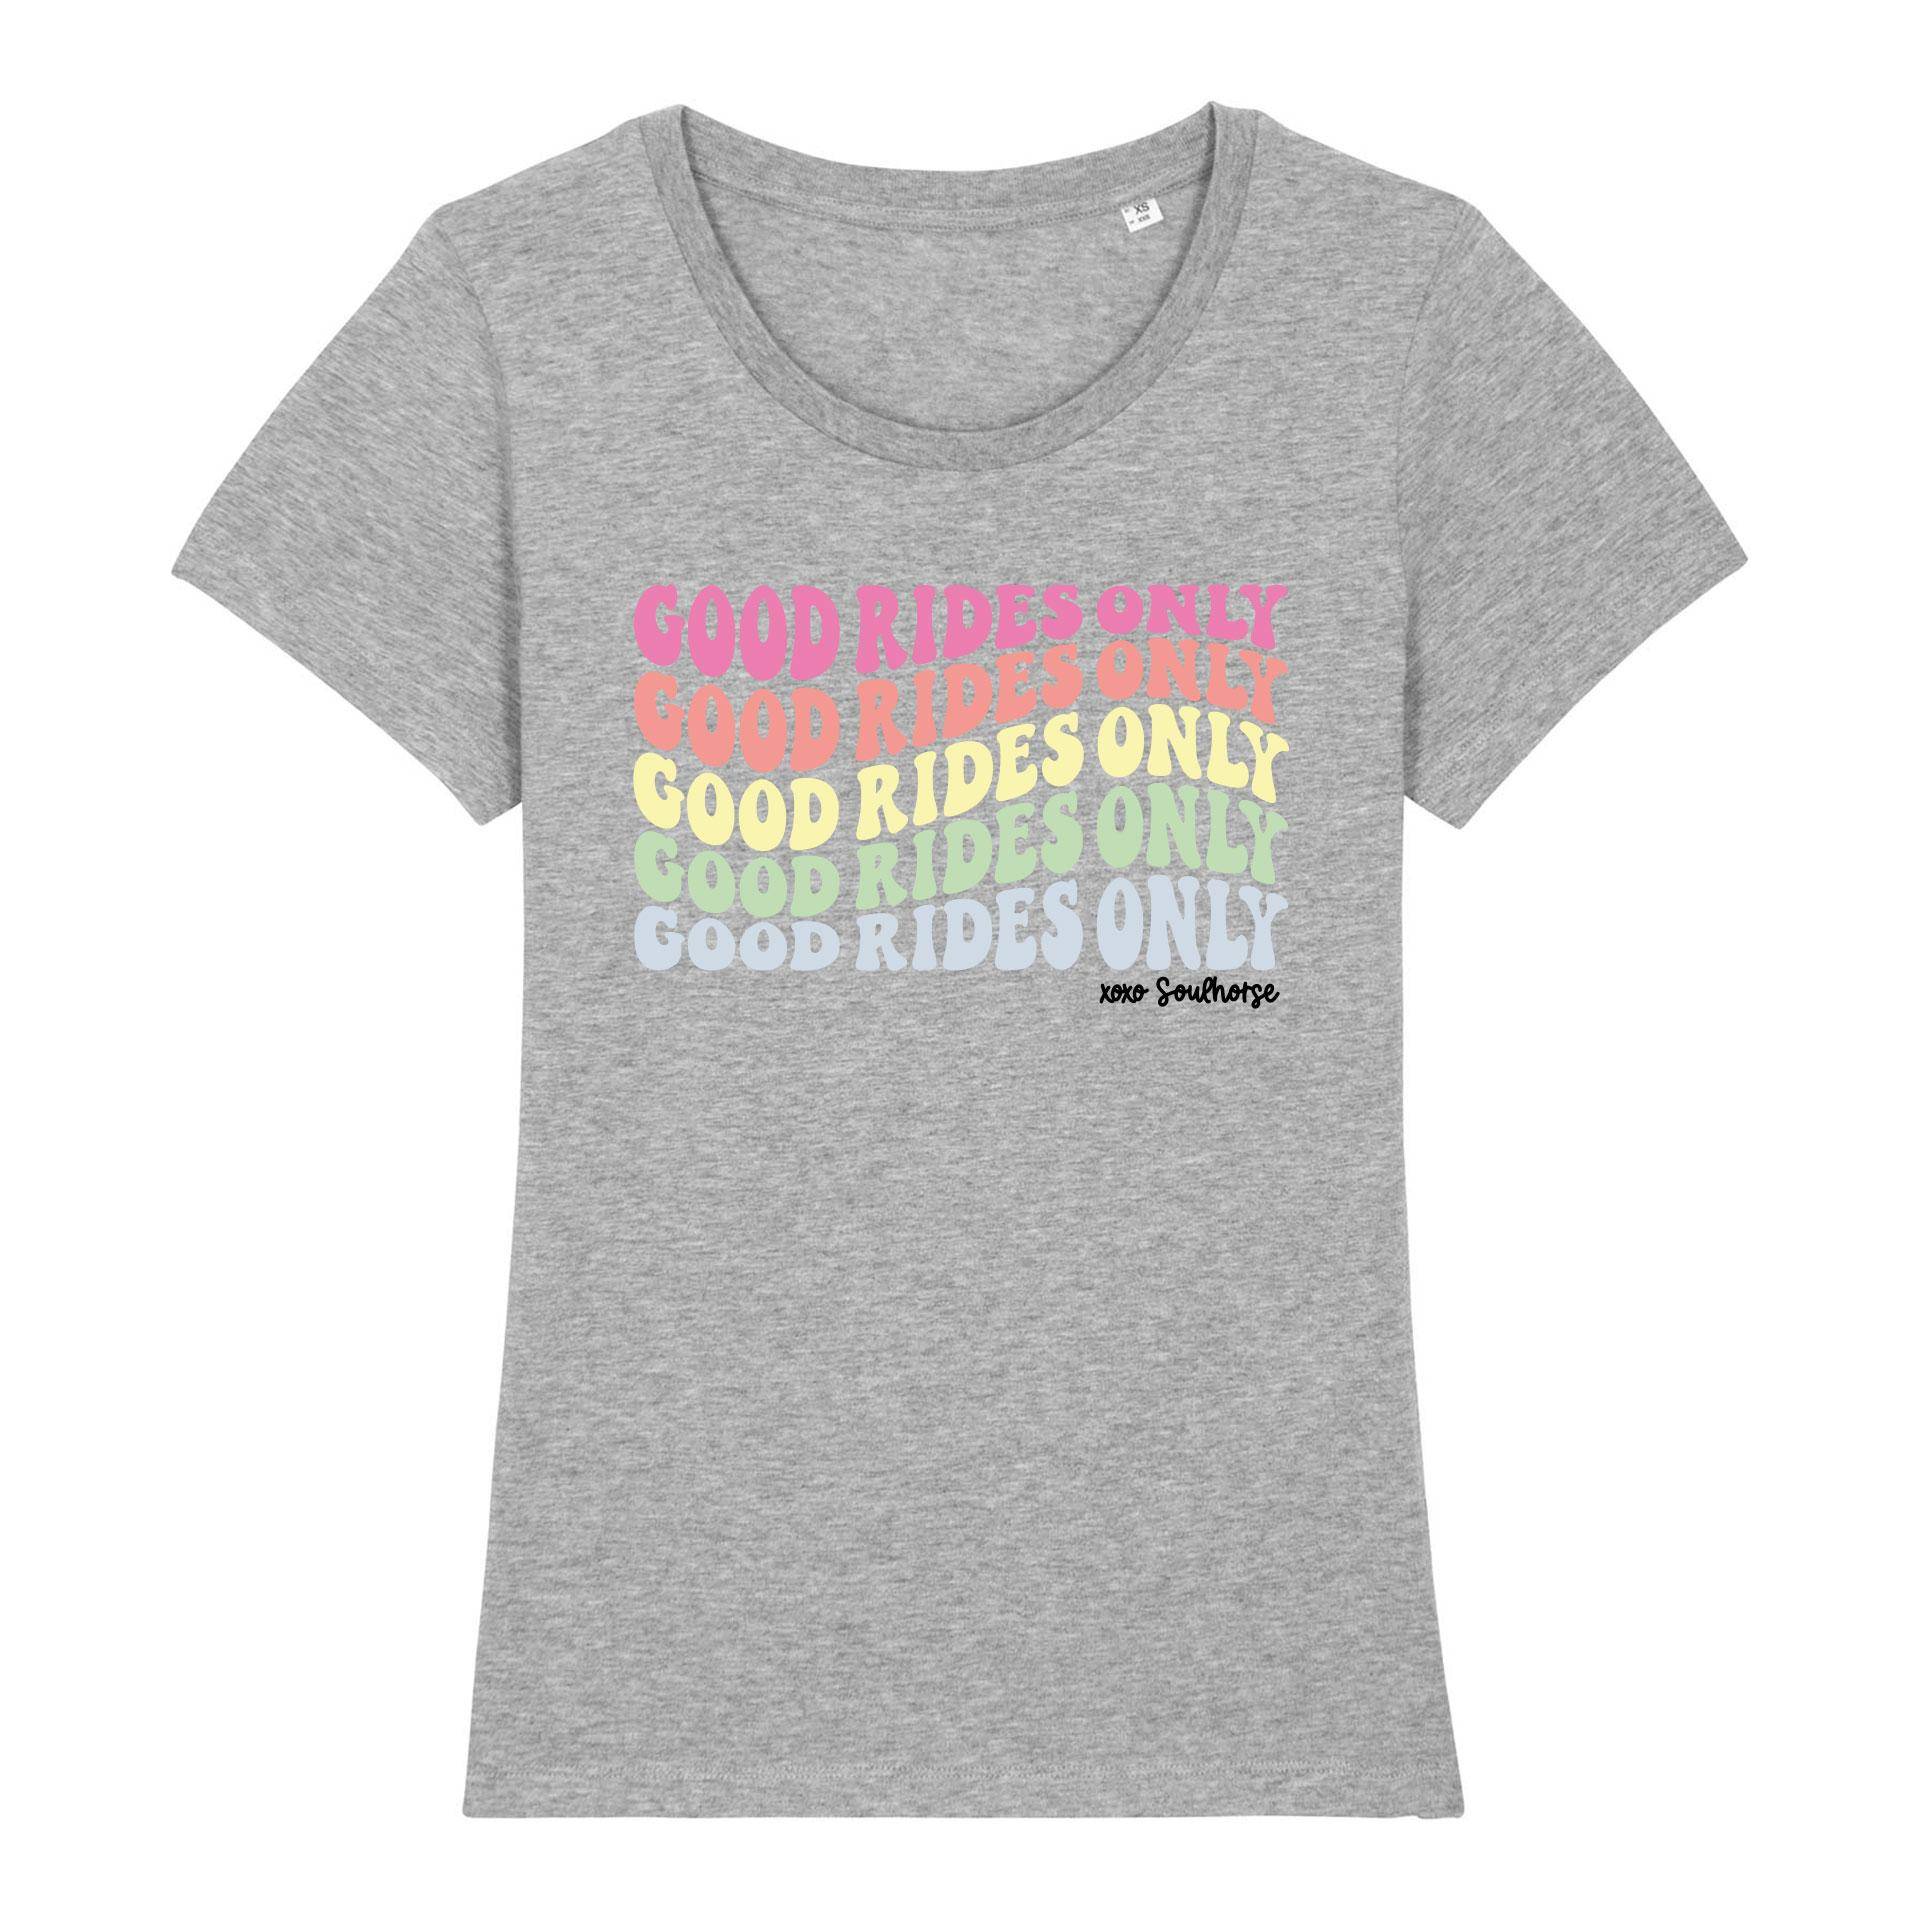 Soulhorse Goodridesonly Waves Bio T-Shirt Grösse: XS, Farbe: Heather Grey von Soulhorse